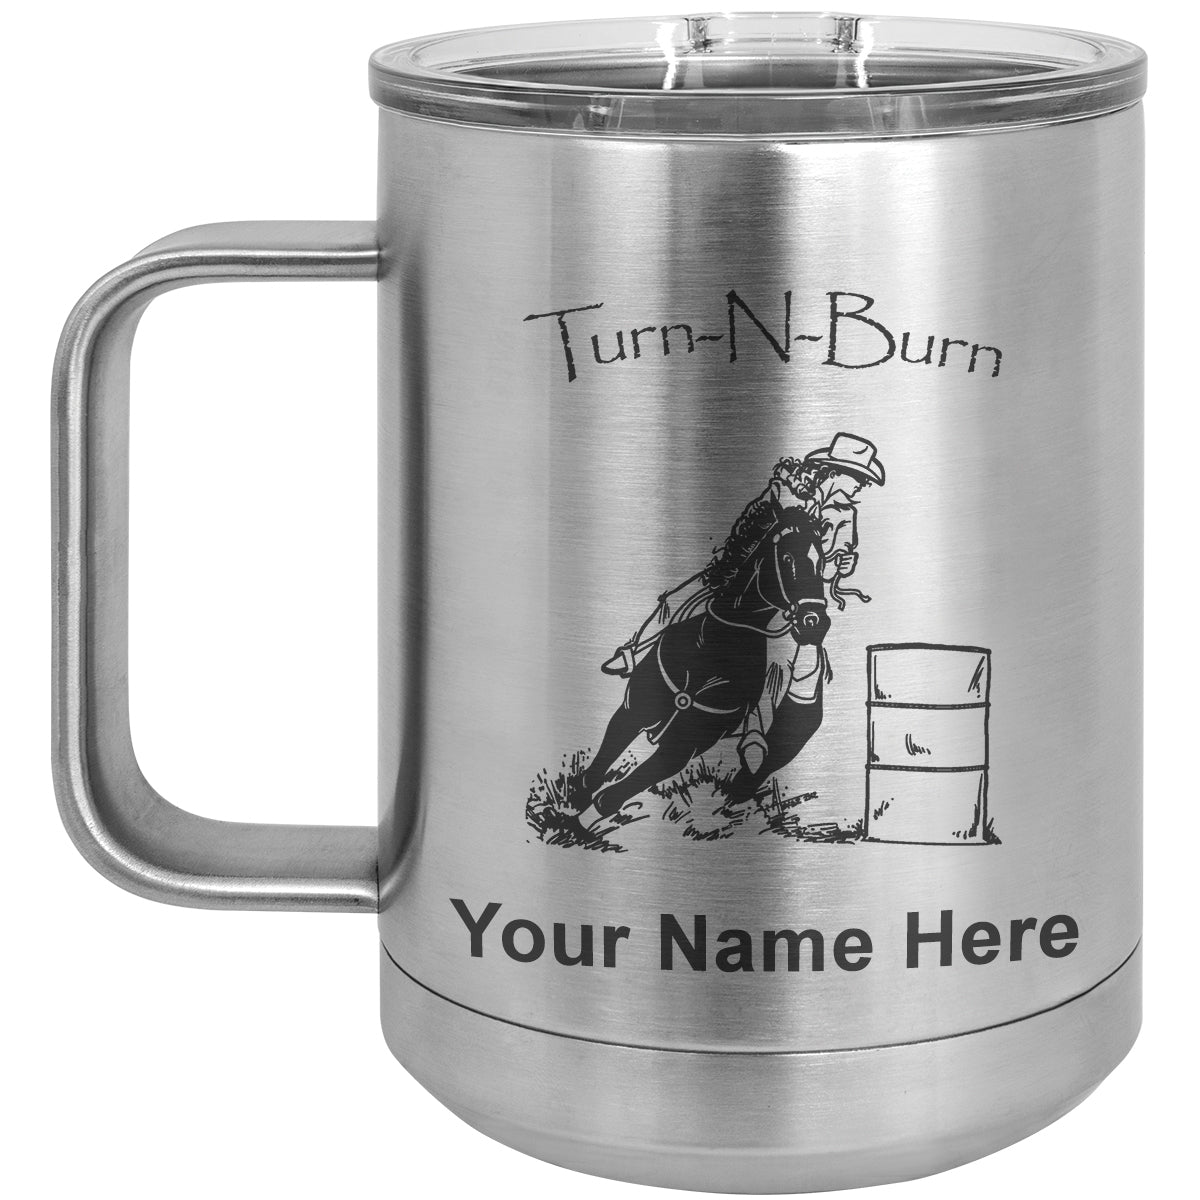 15oz Vacuum Insulated Coffee Mug, Barrel Racer Turn N Burn, Personalized Engraving Included